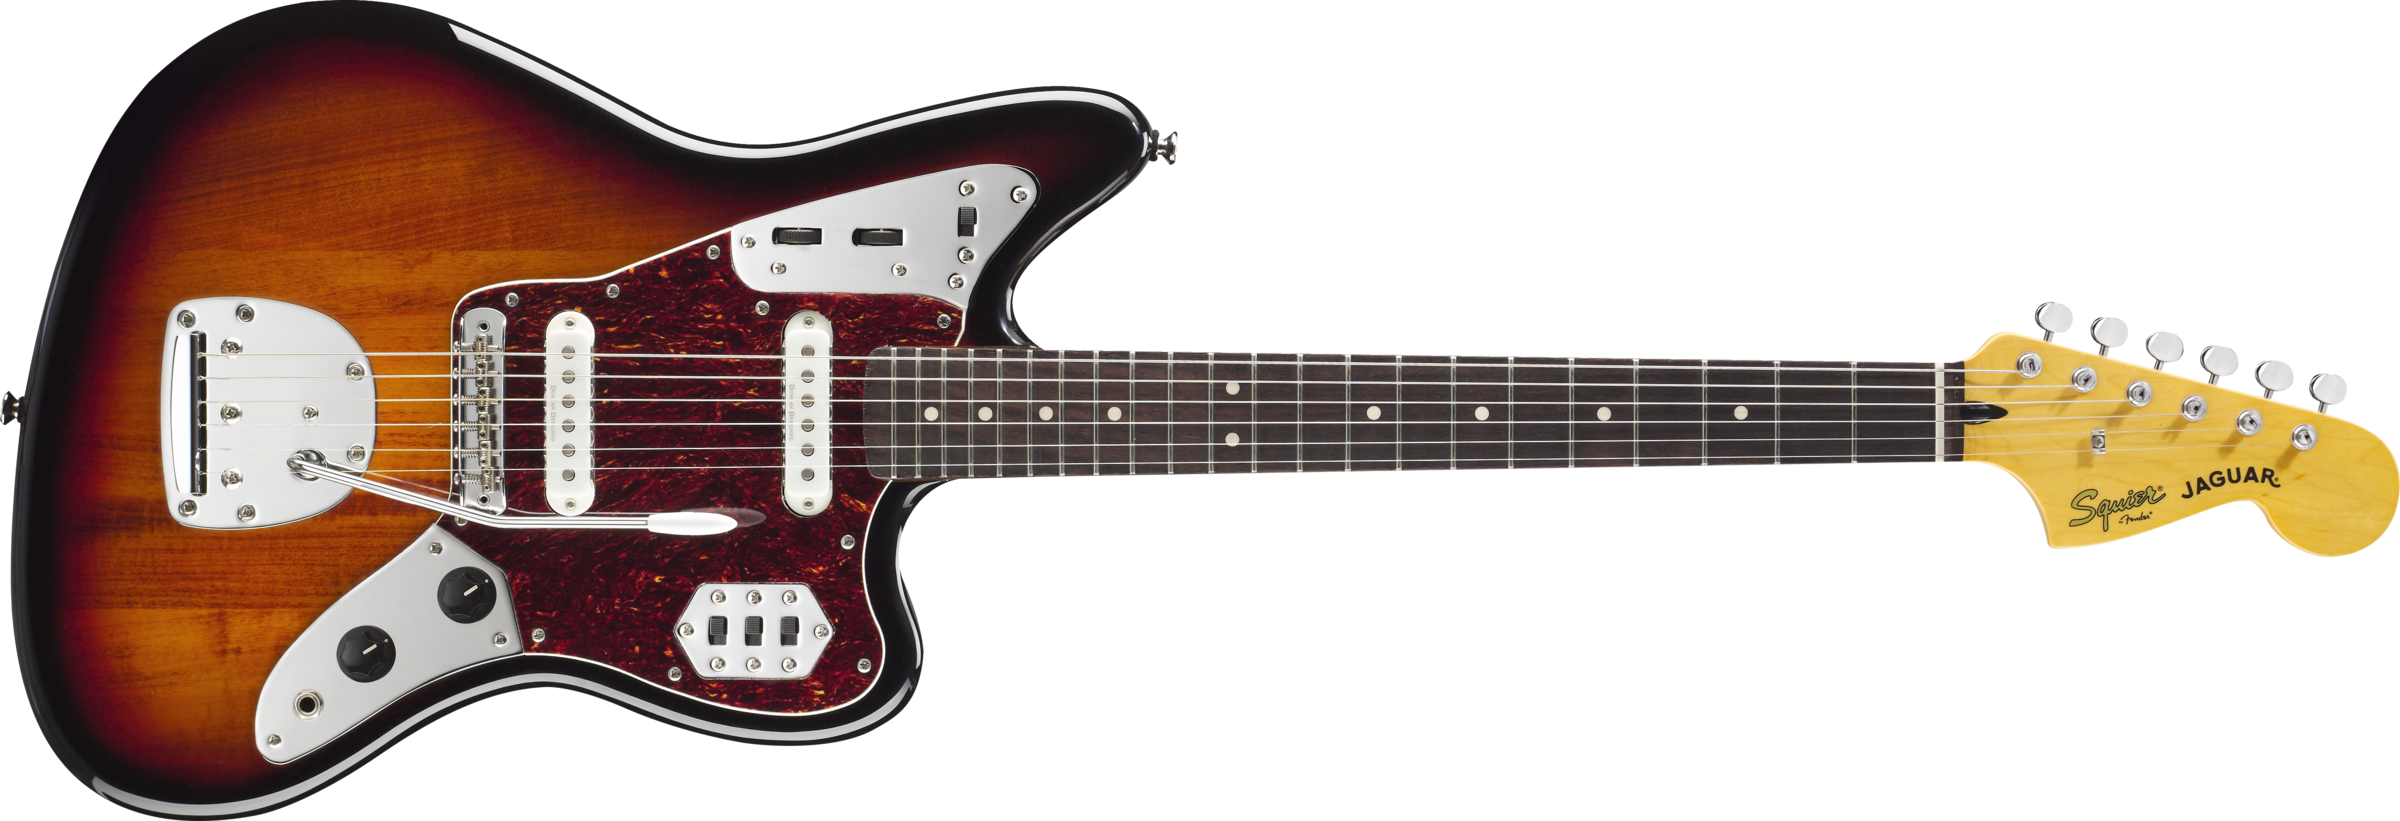 Squier Vintage Modified Jaguar 3 Color Sunburst - Fender Jazzmaster Classic Player Sunburst (2400x821), Png Download